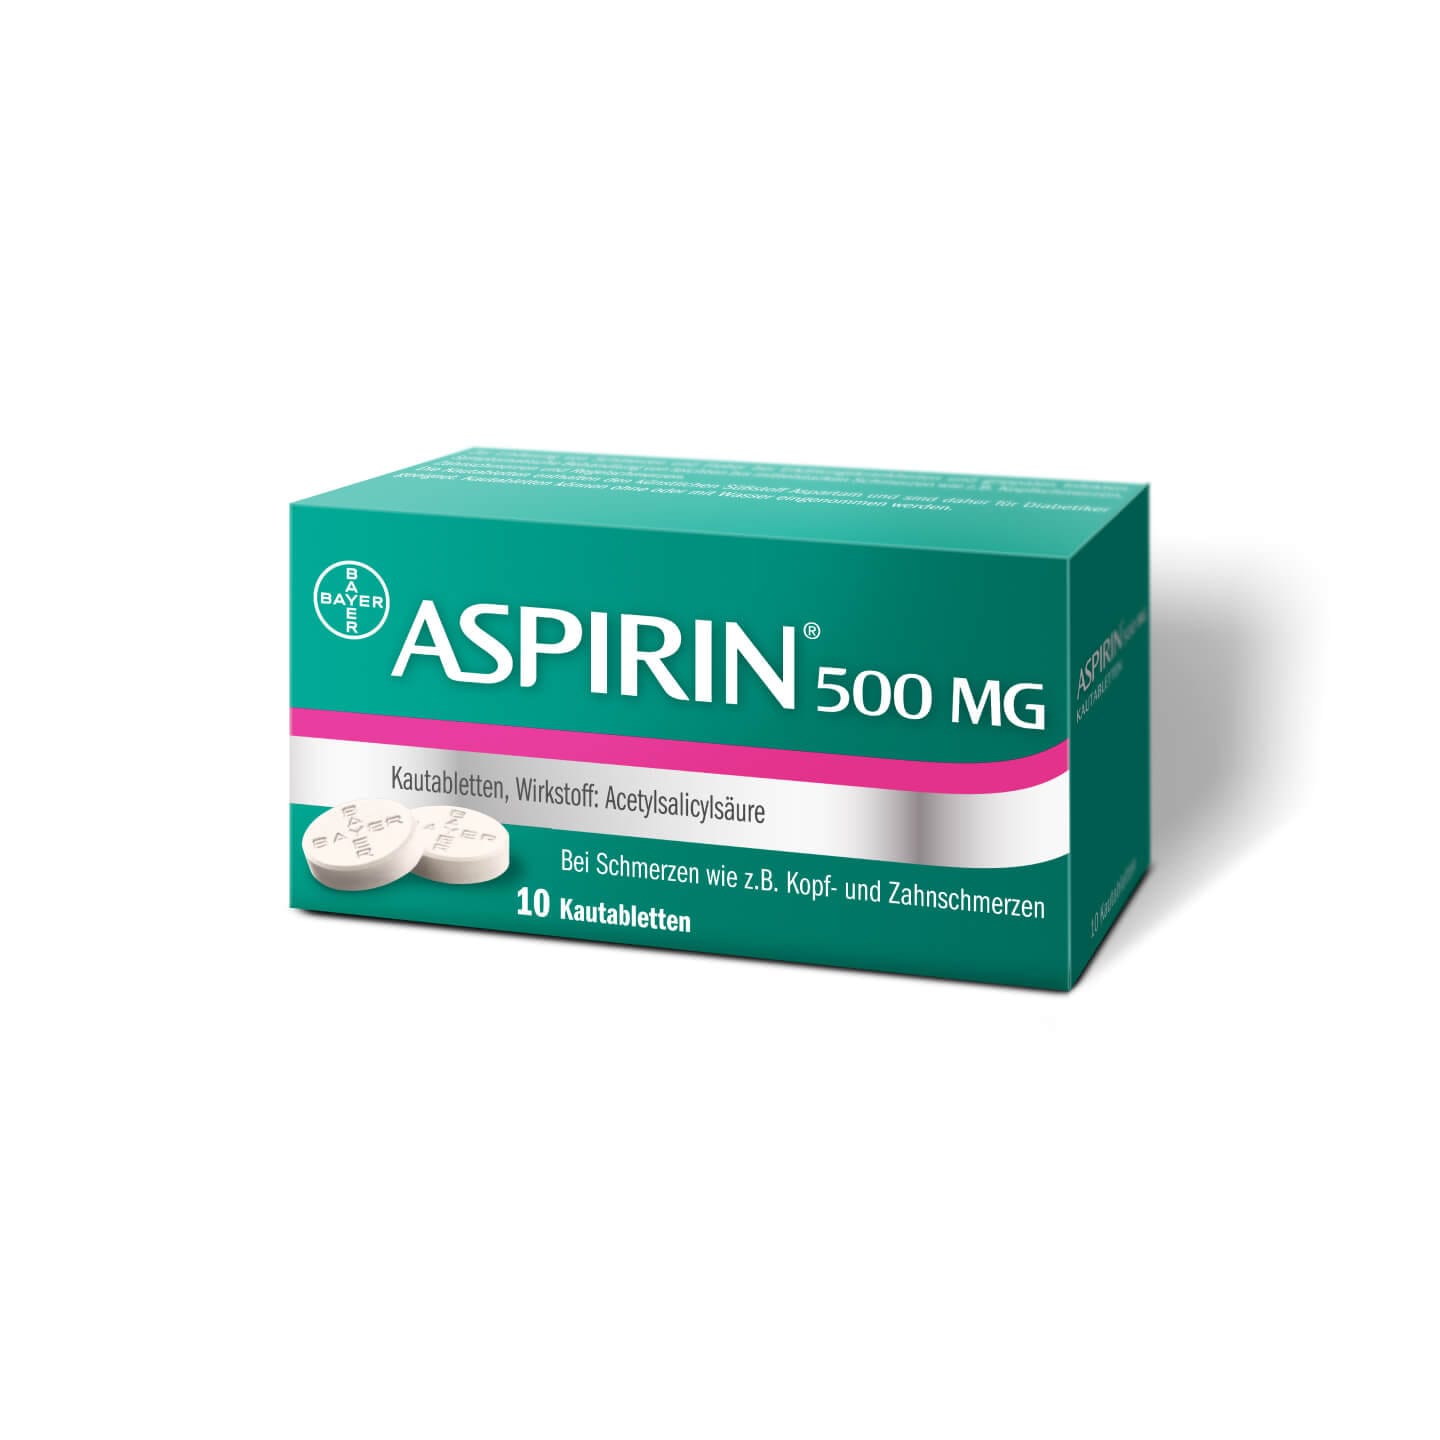 Aspirin® Kautabletten